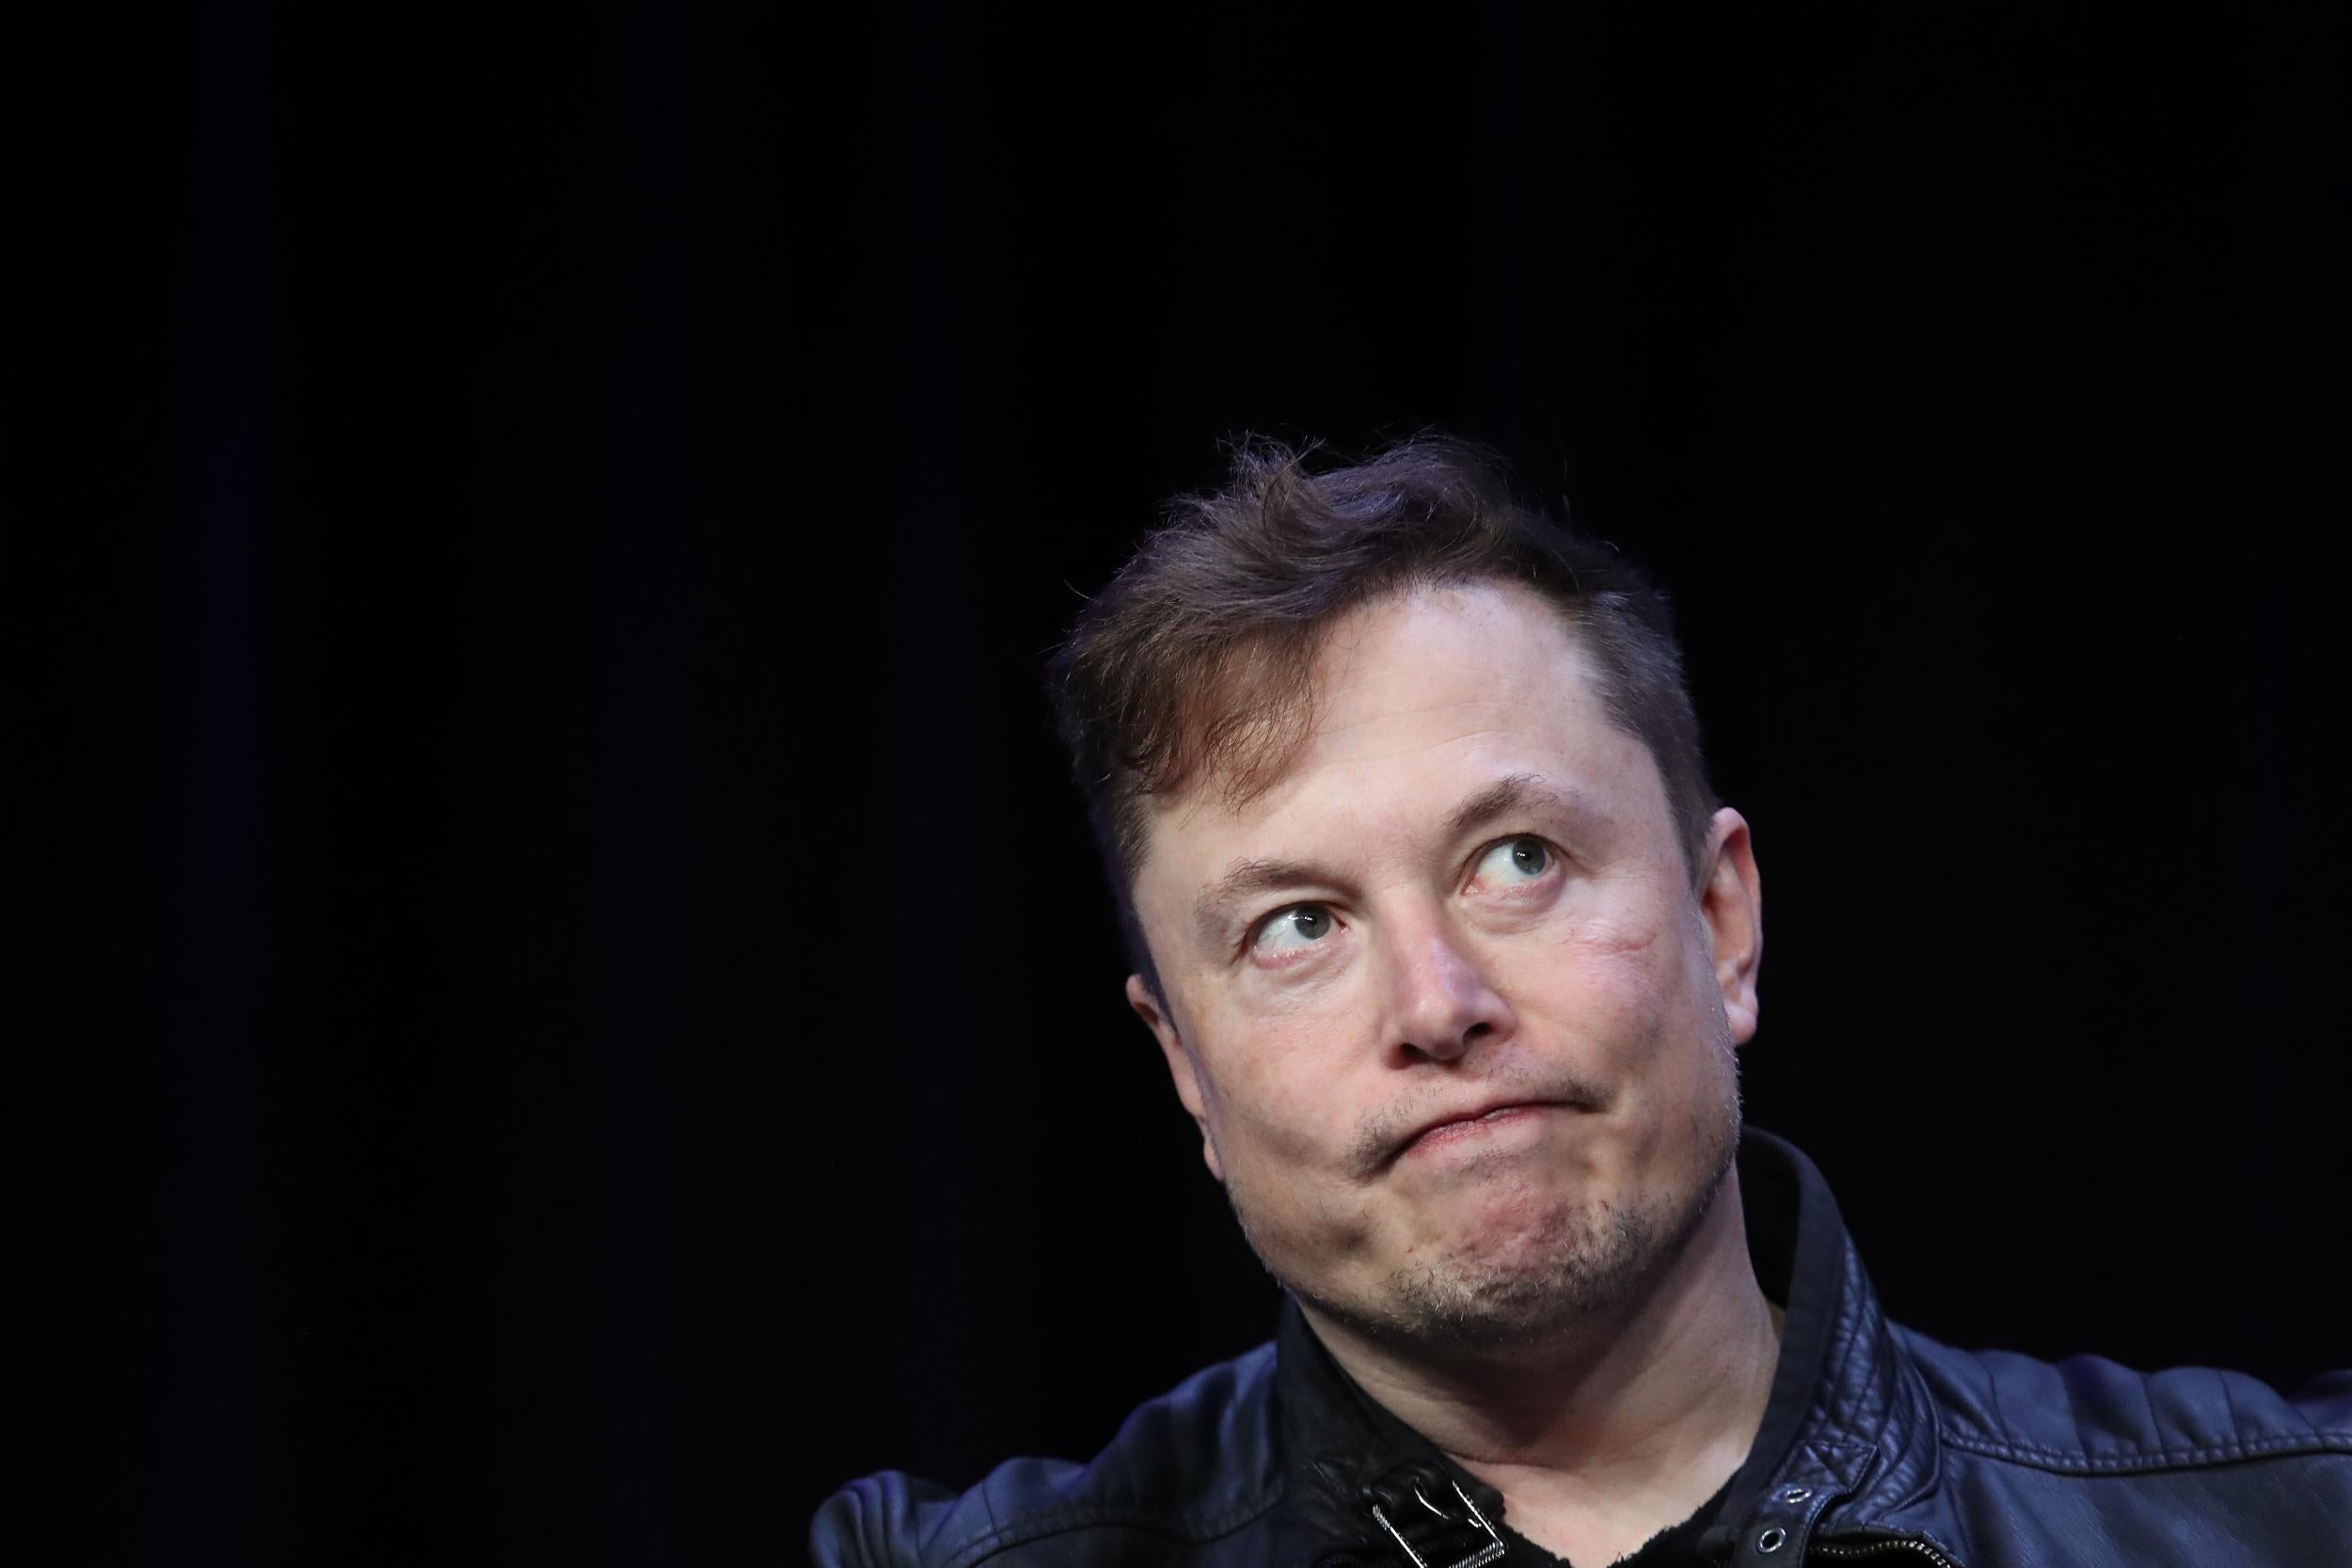 Chief executive Elon Musk said he would take company’s headquarters and future programmes to Texas and Nevada